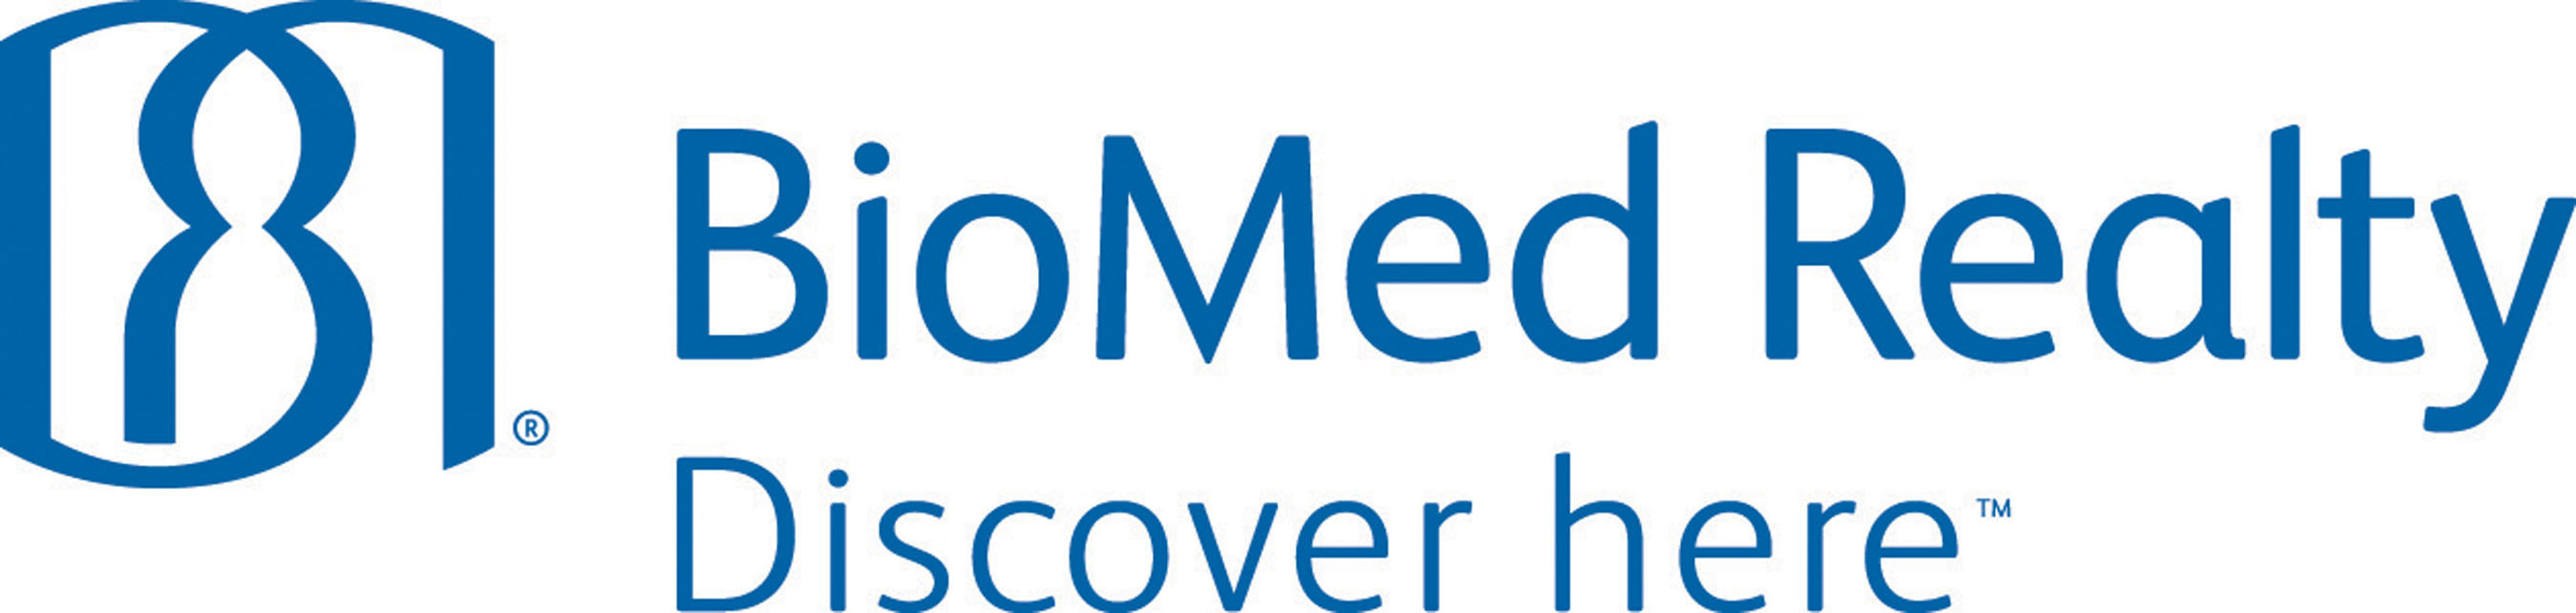 BioMed Realty Trust Logo. (PRNewsFoto/BioMed Realty Trust) (PRNewsFoto/)